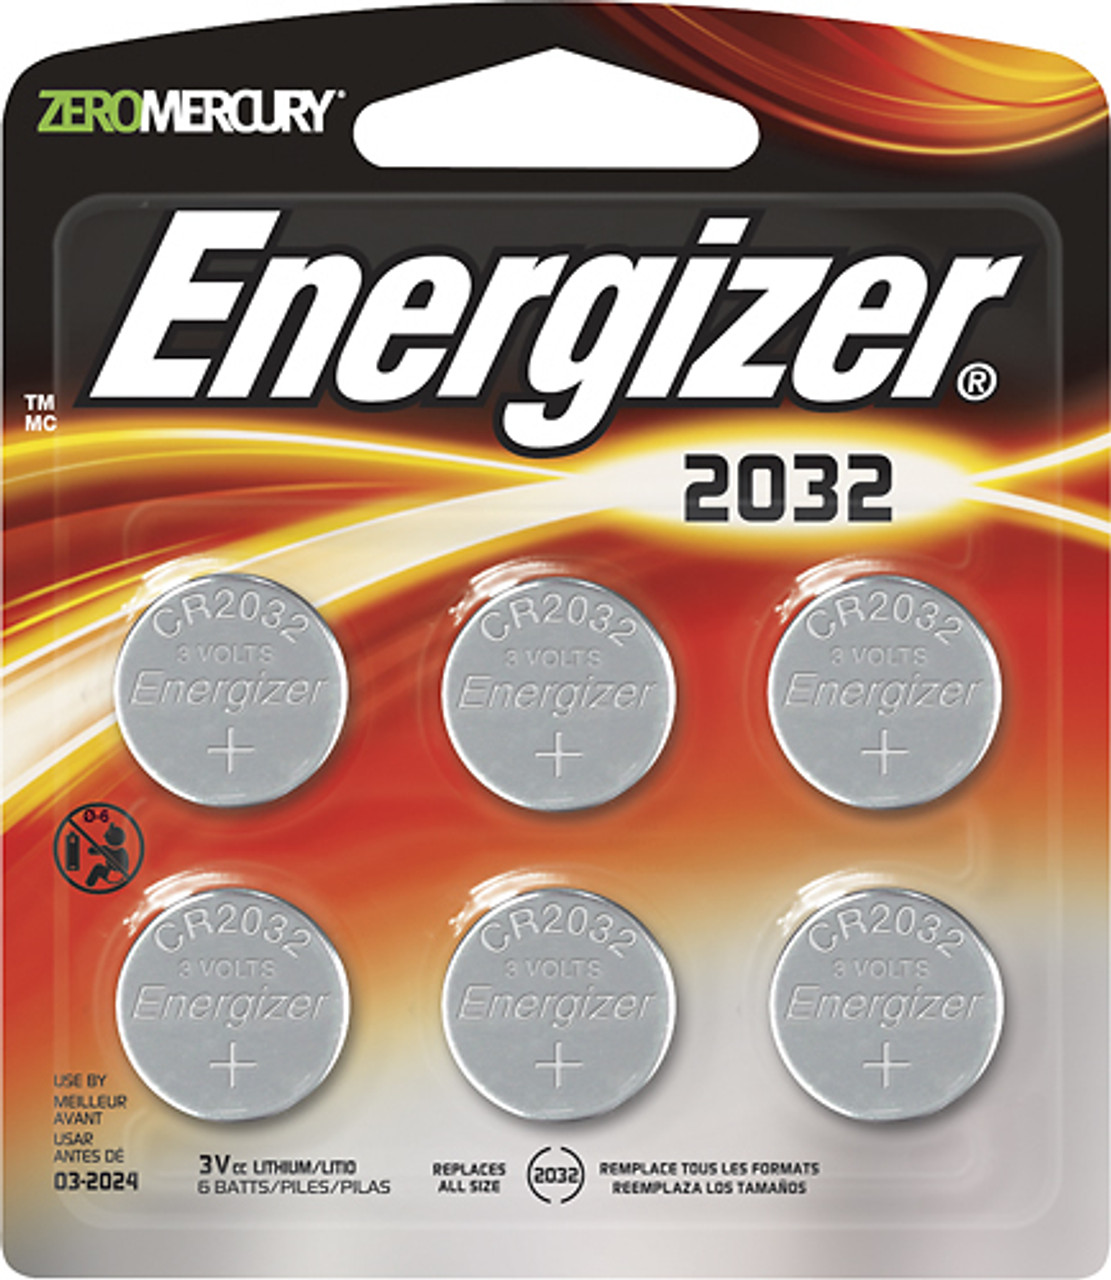 Energizer - 2032 Batteries (6-Pack)